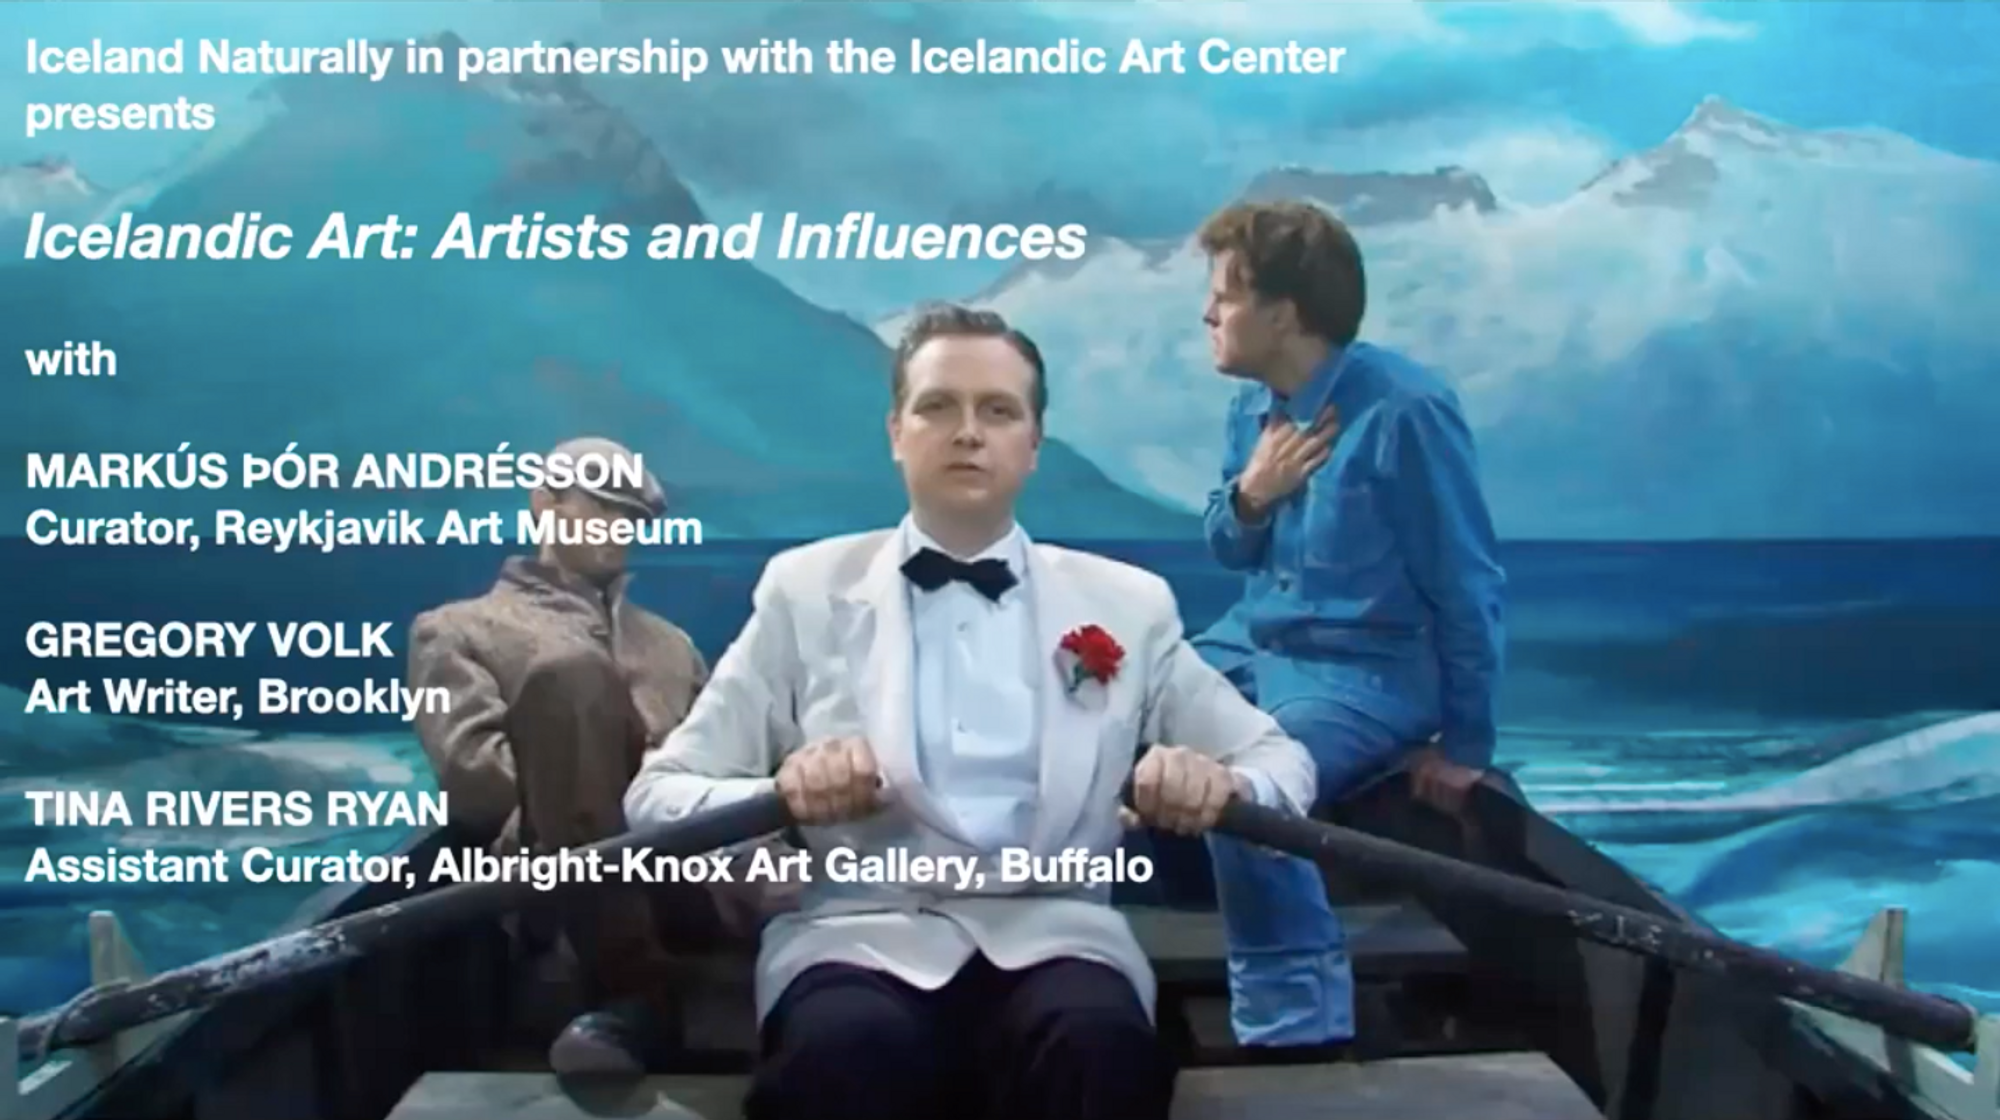 Icelandic Art: Artists and Influences